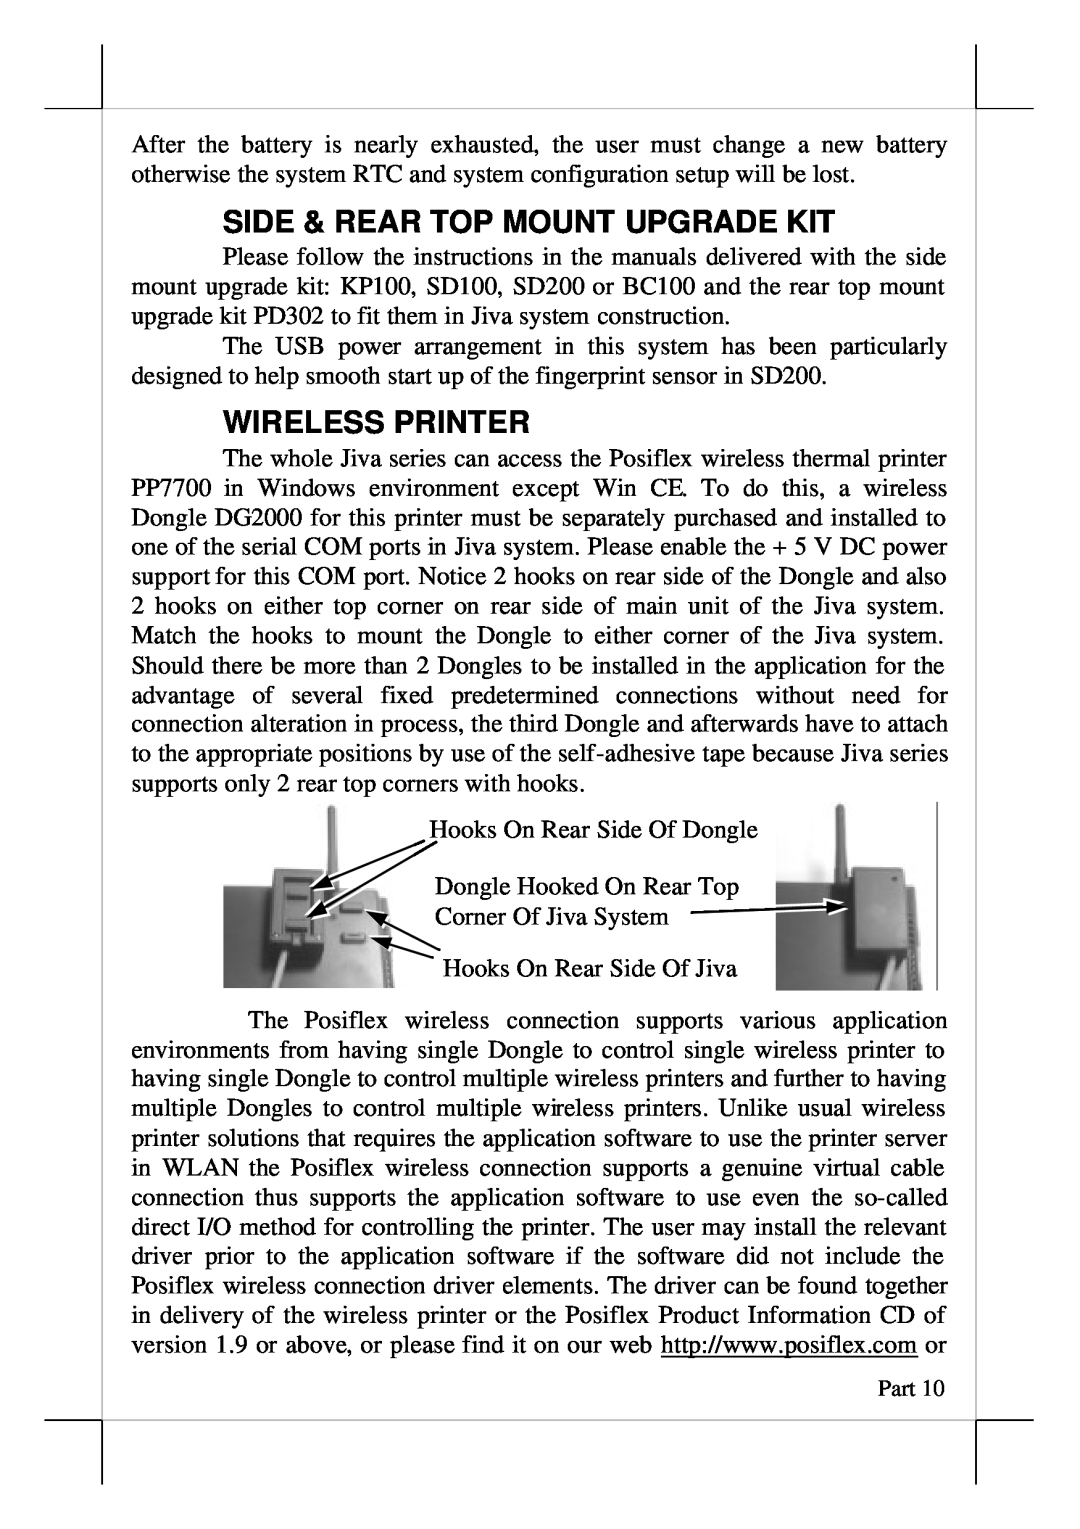 POSIFLEX Business Machines TP/LT- 8000, TP/LT- 5700, TP/LT- 5600 Side & Rear Top Mount Upgrade Kit, Wireless Printer 